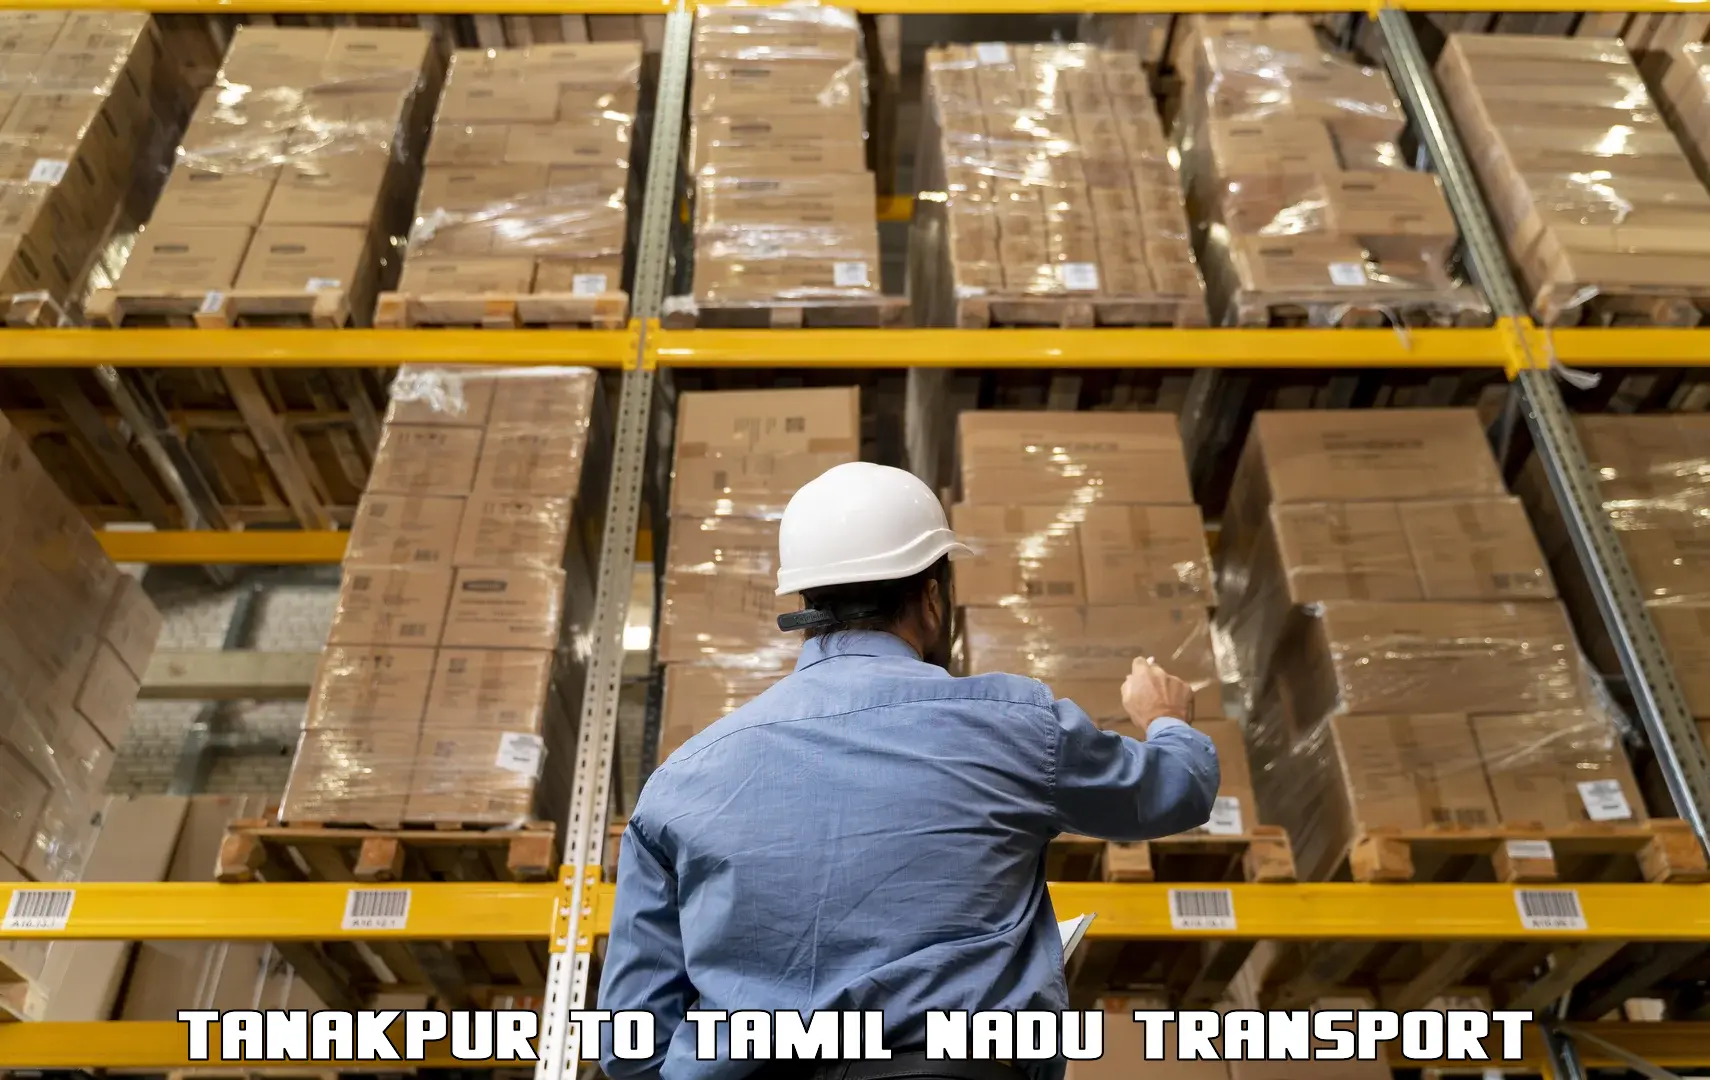 India truck logistics services Tanakpur to Batlagundu